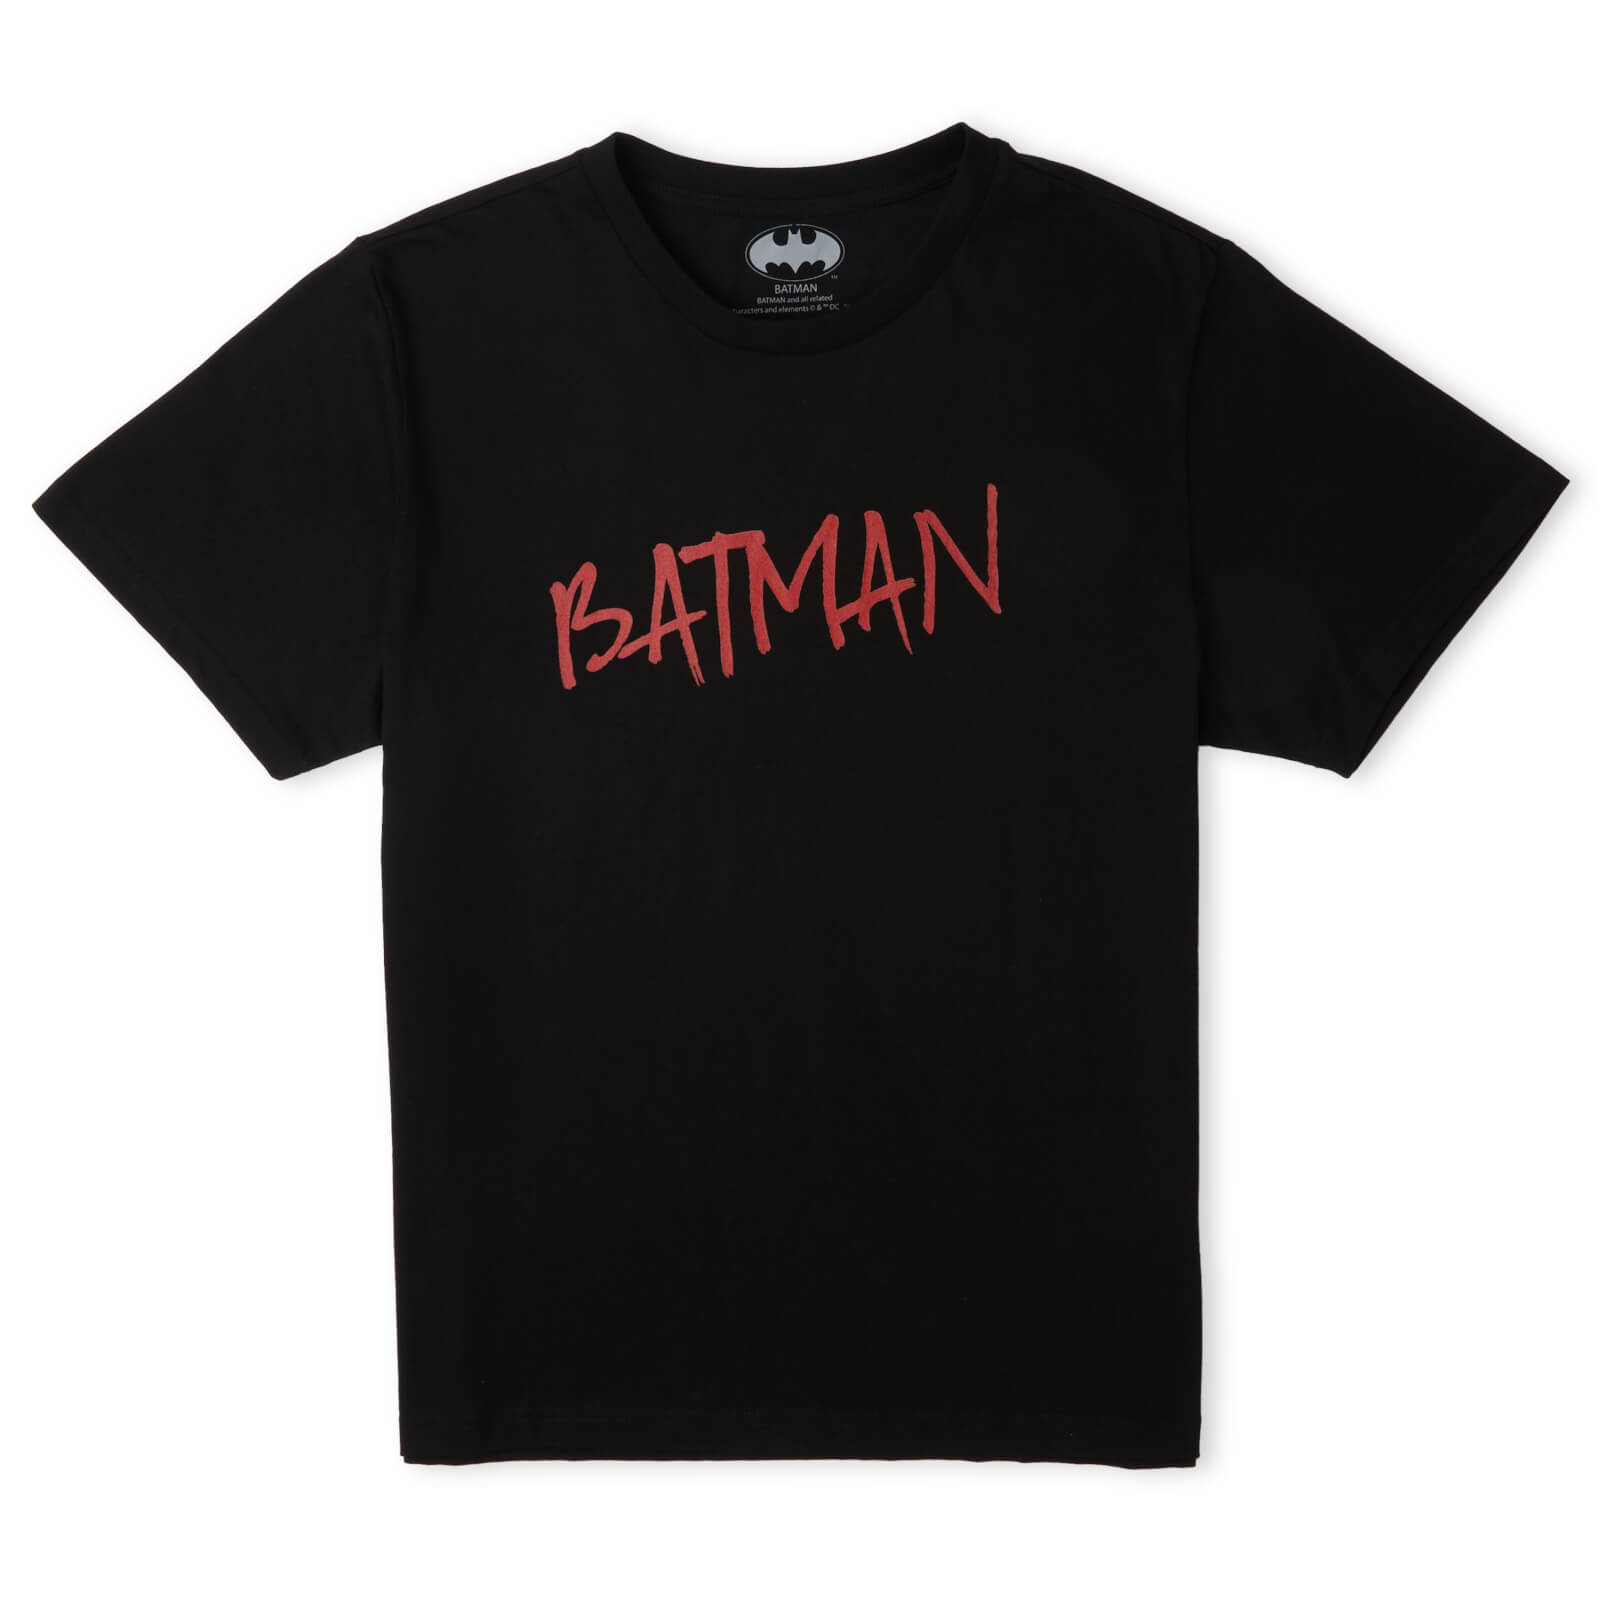 Batman Graffiti Unisex T-Shirt - Black - XS - Black